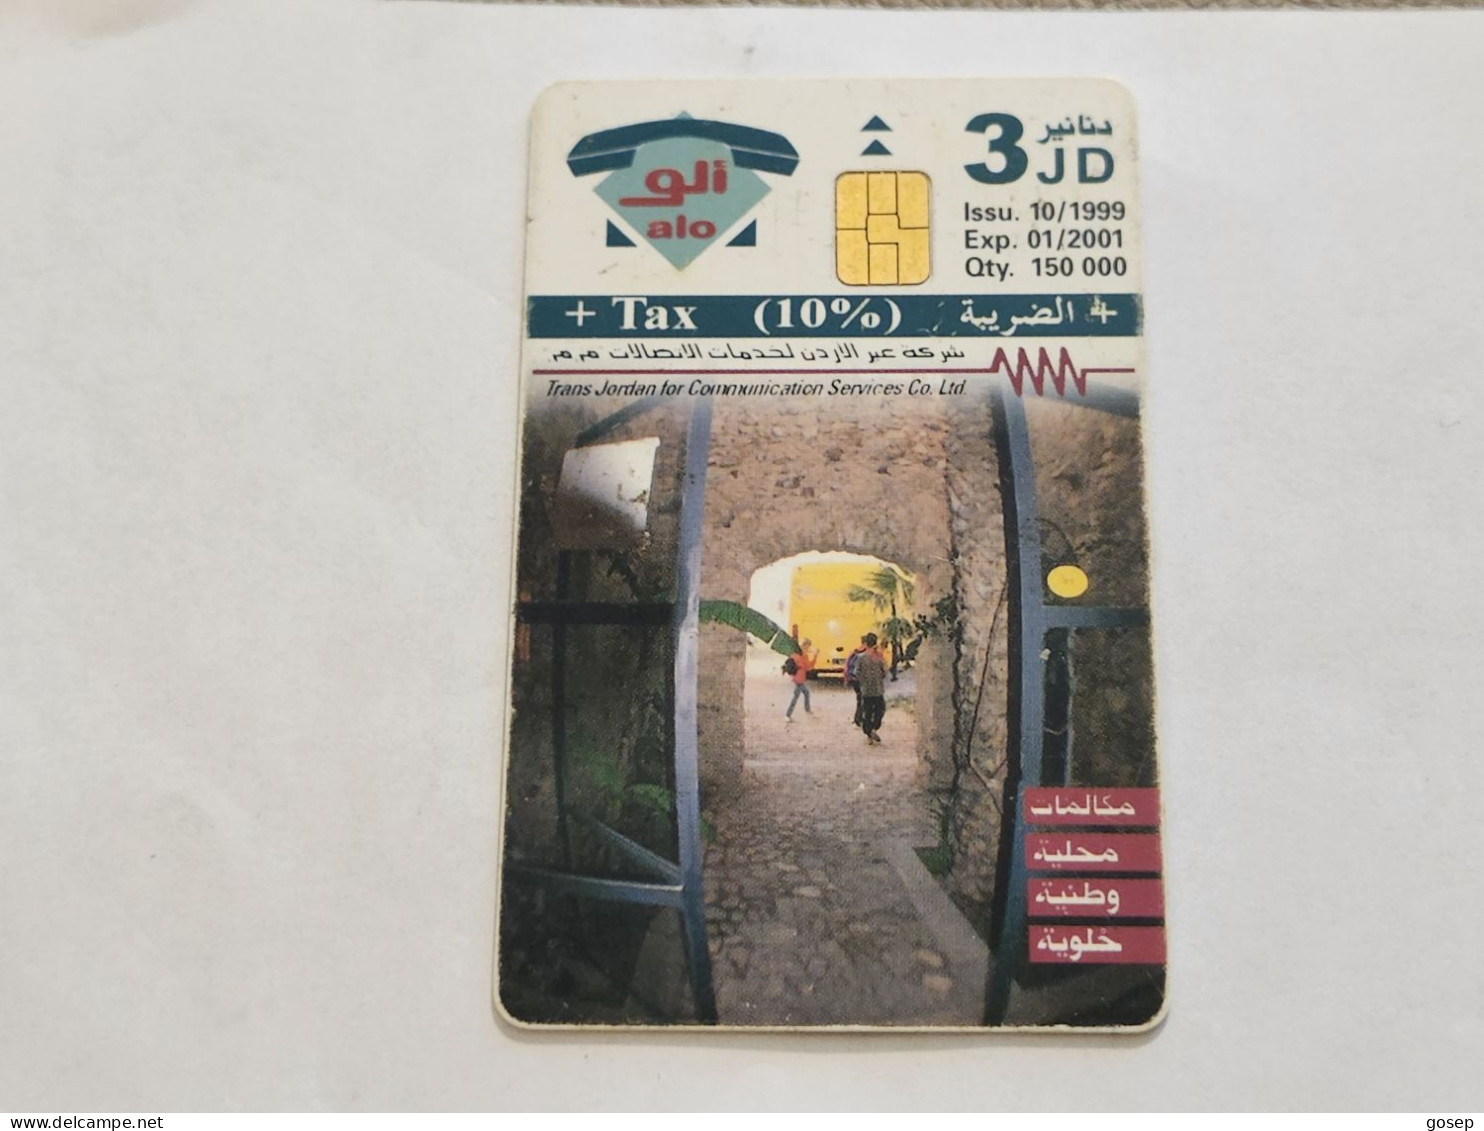 JORDAN-(JO-ALO-0067)-Tabqat Fahel "Pella-(187)-(1101-620111)-(3JD)-(01/2001)-used Card+1card Prepiad Free - Jordania